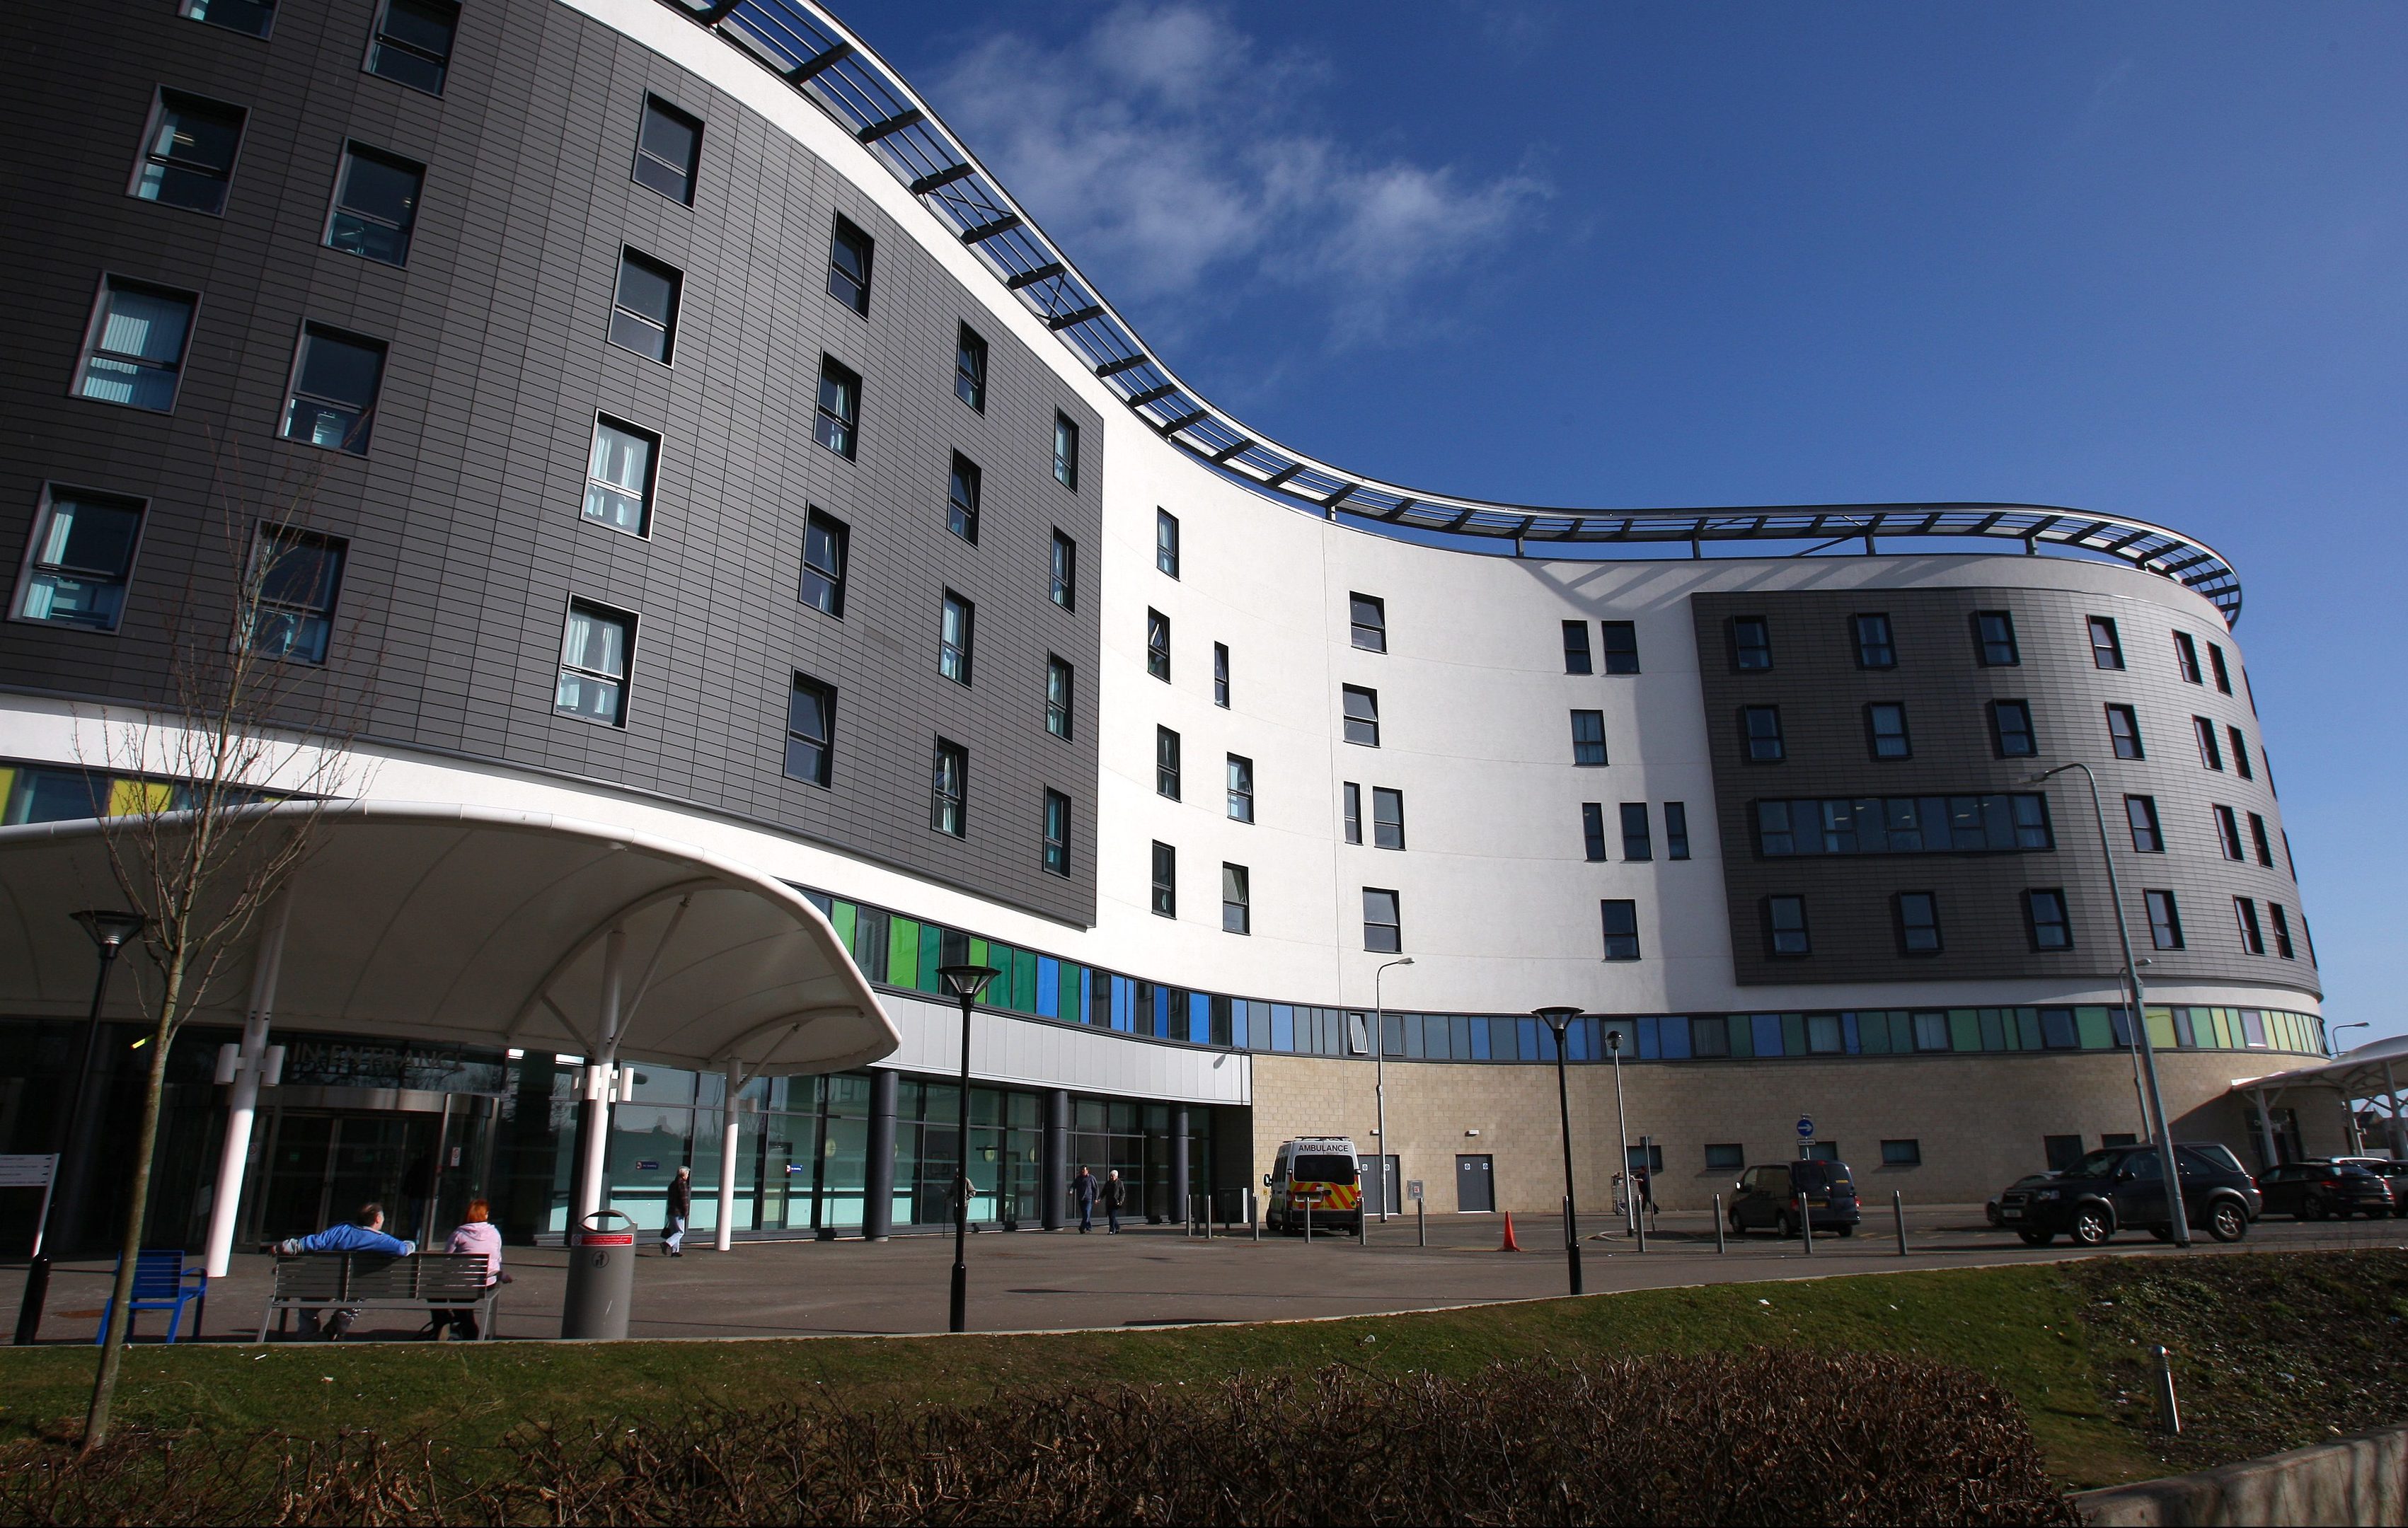 Victoria Hospital in Kirkcaldy.